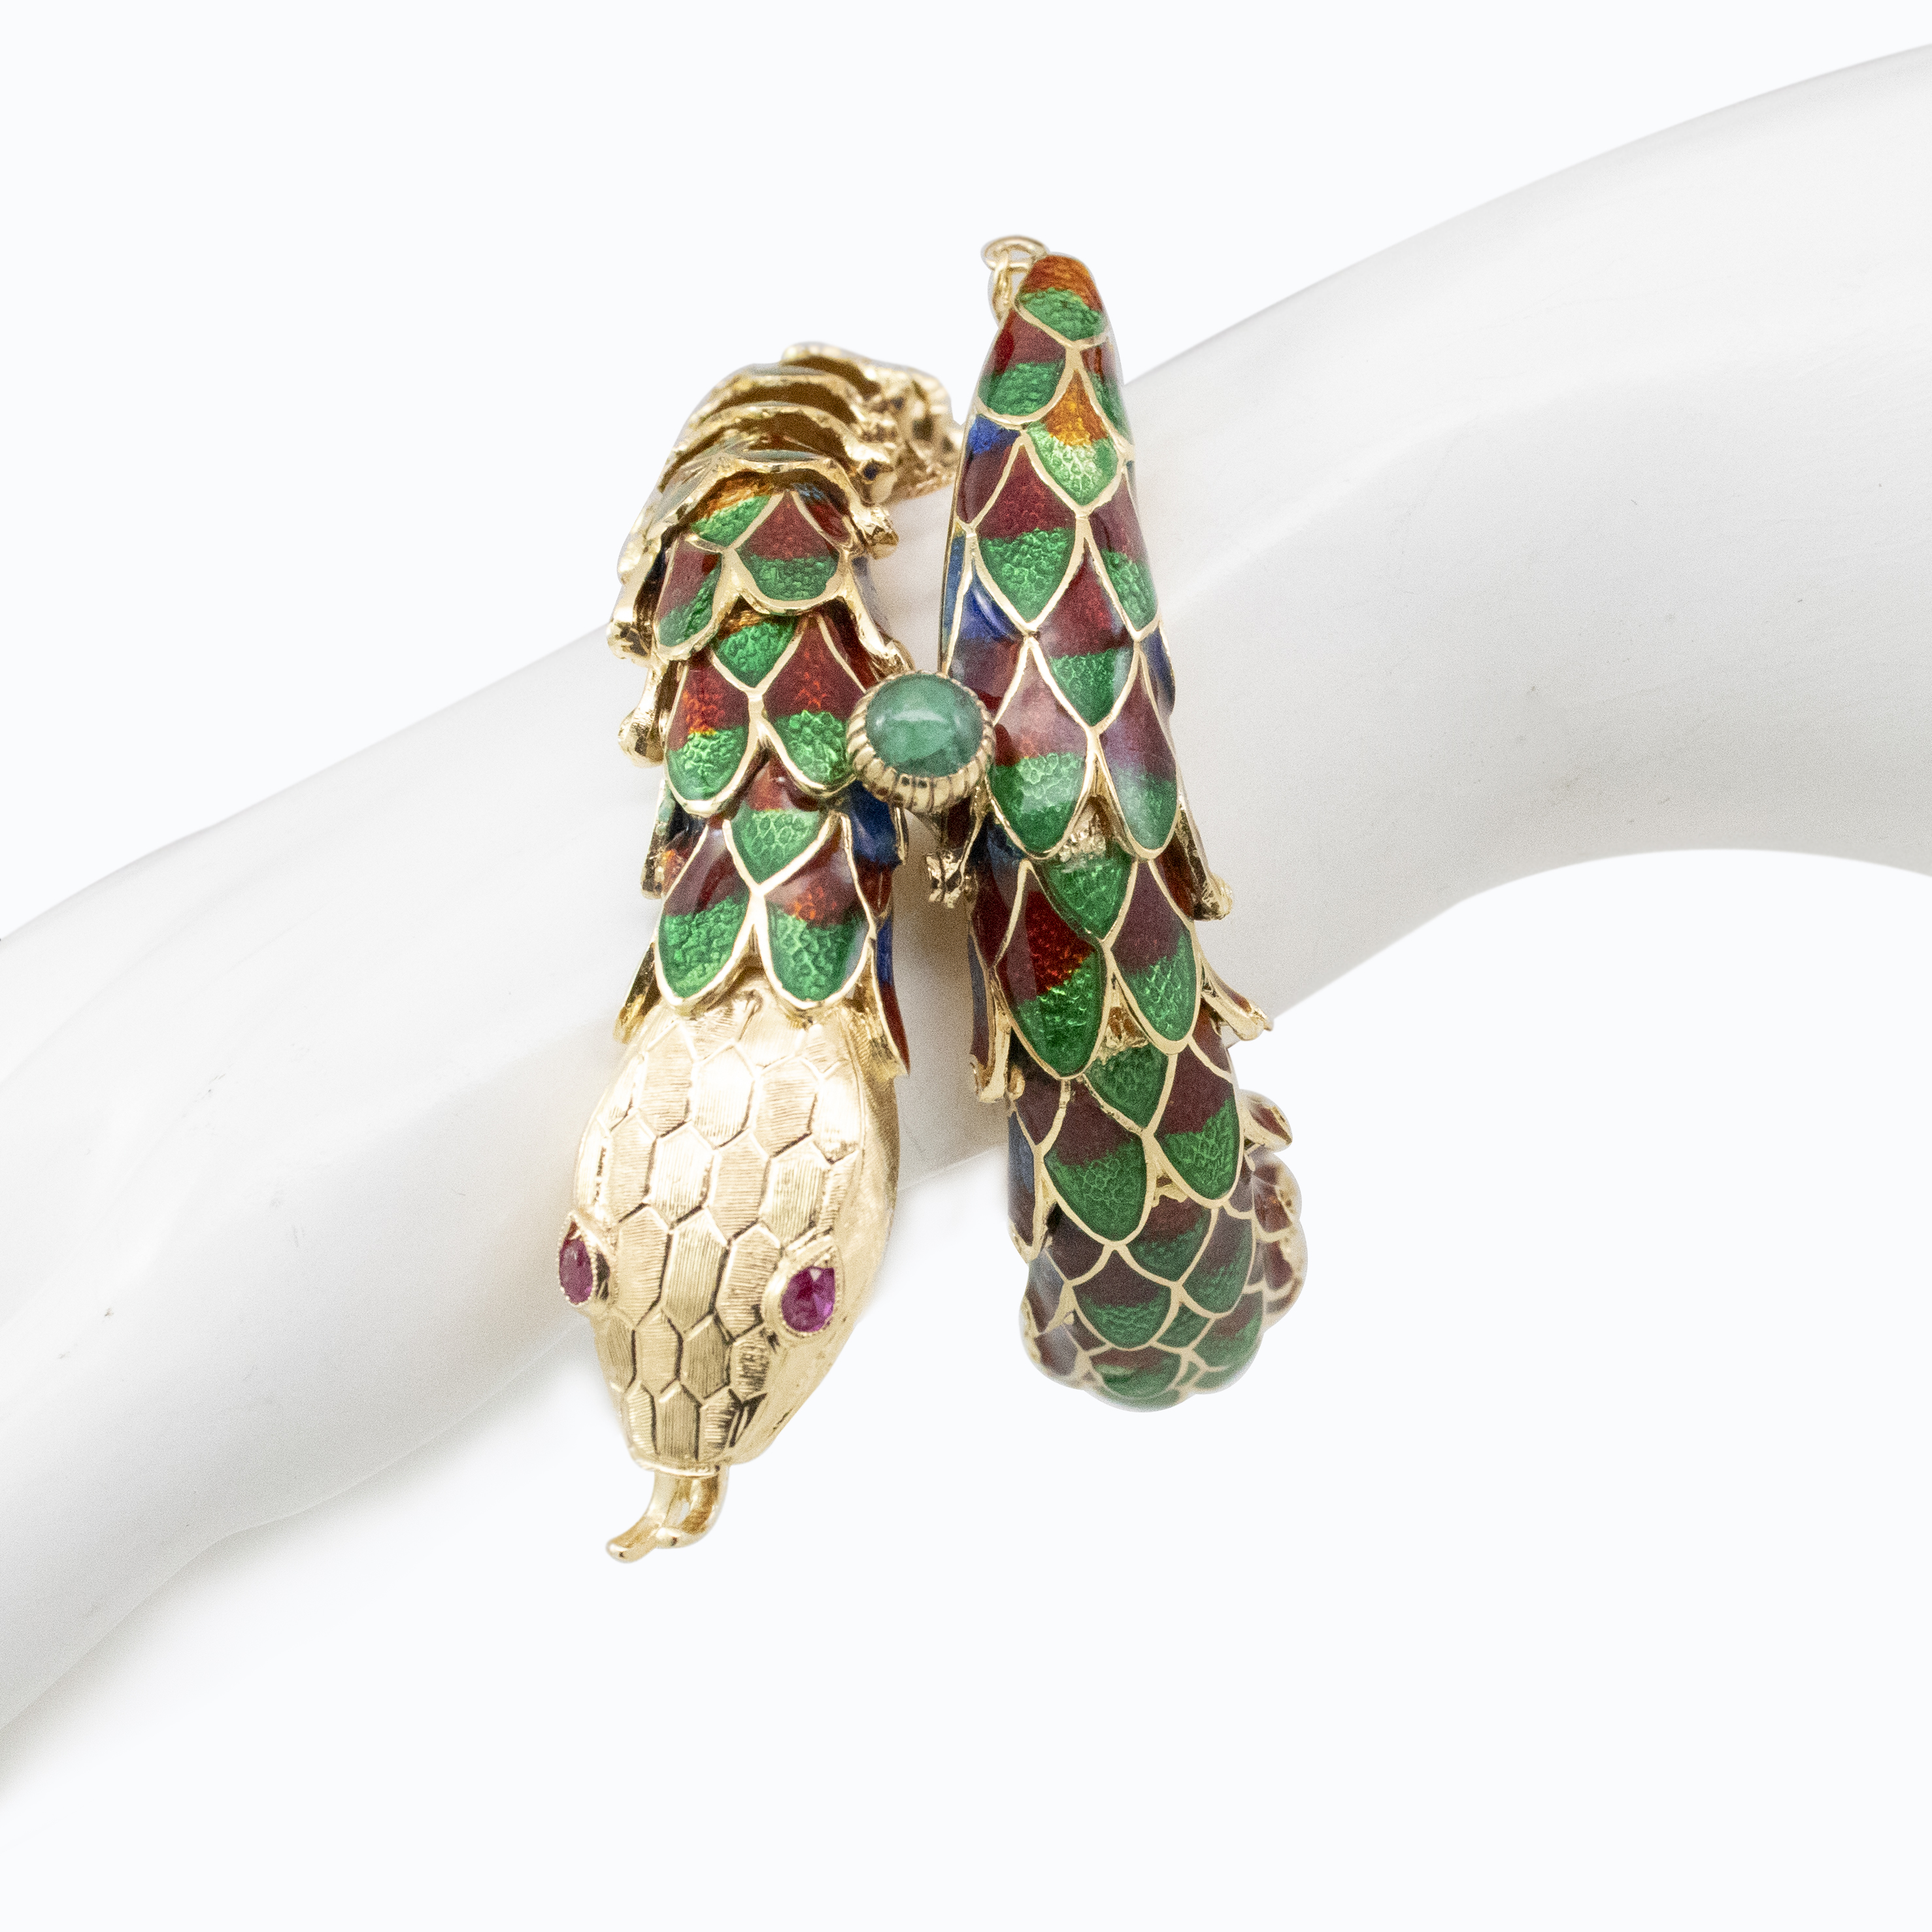 Vintage Inspired Enamel Snake Bracelet with Rubies, 18k Yellow Gold